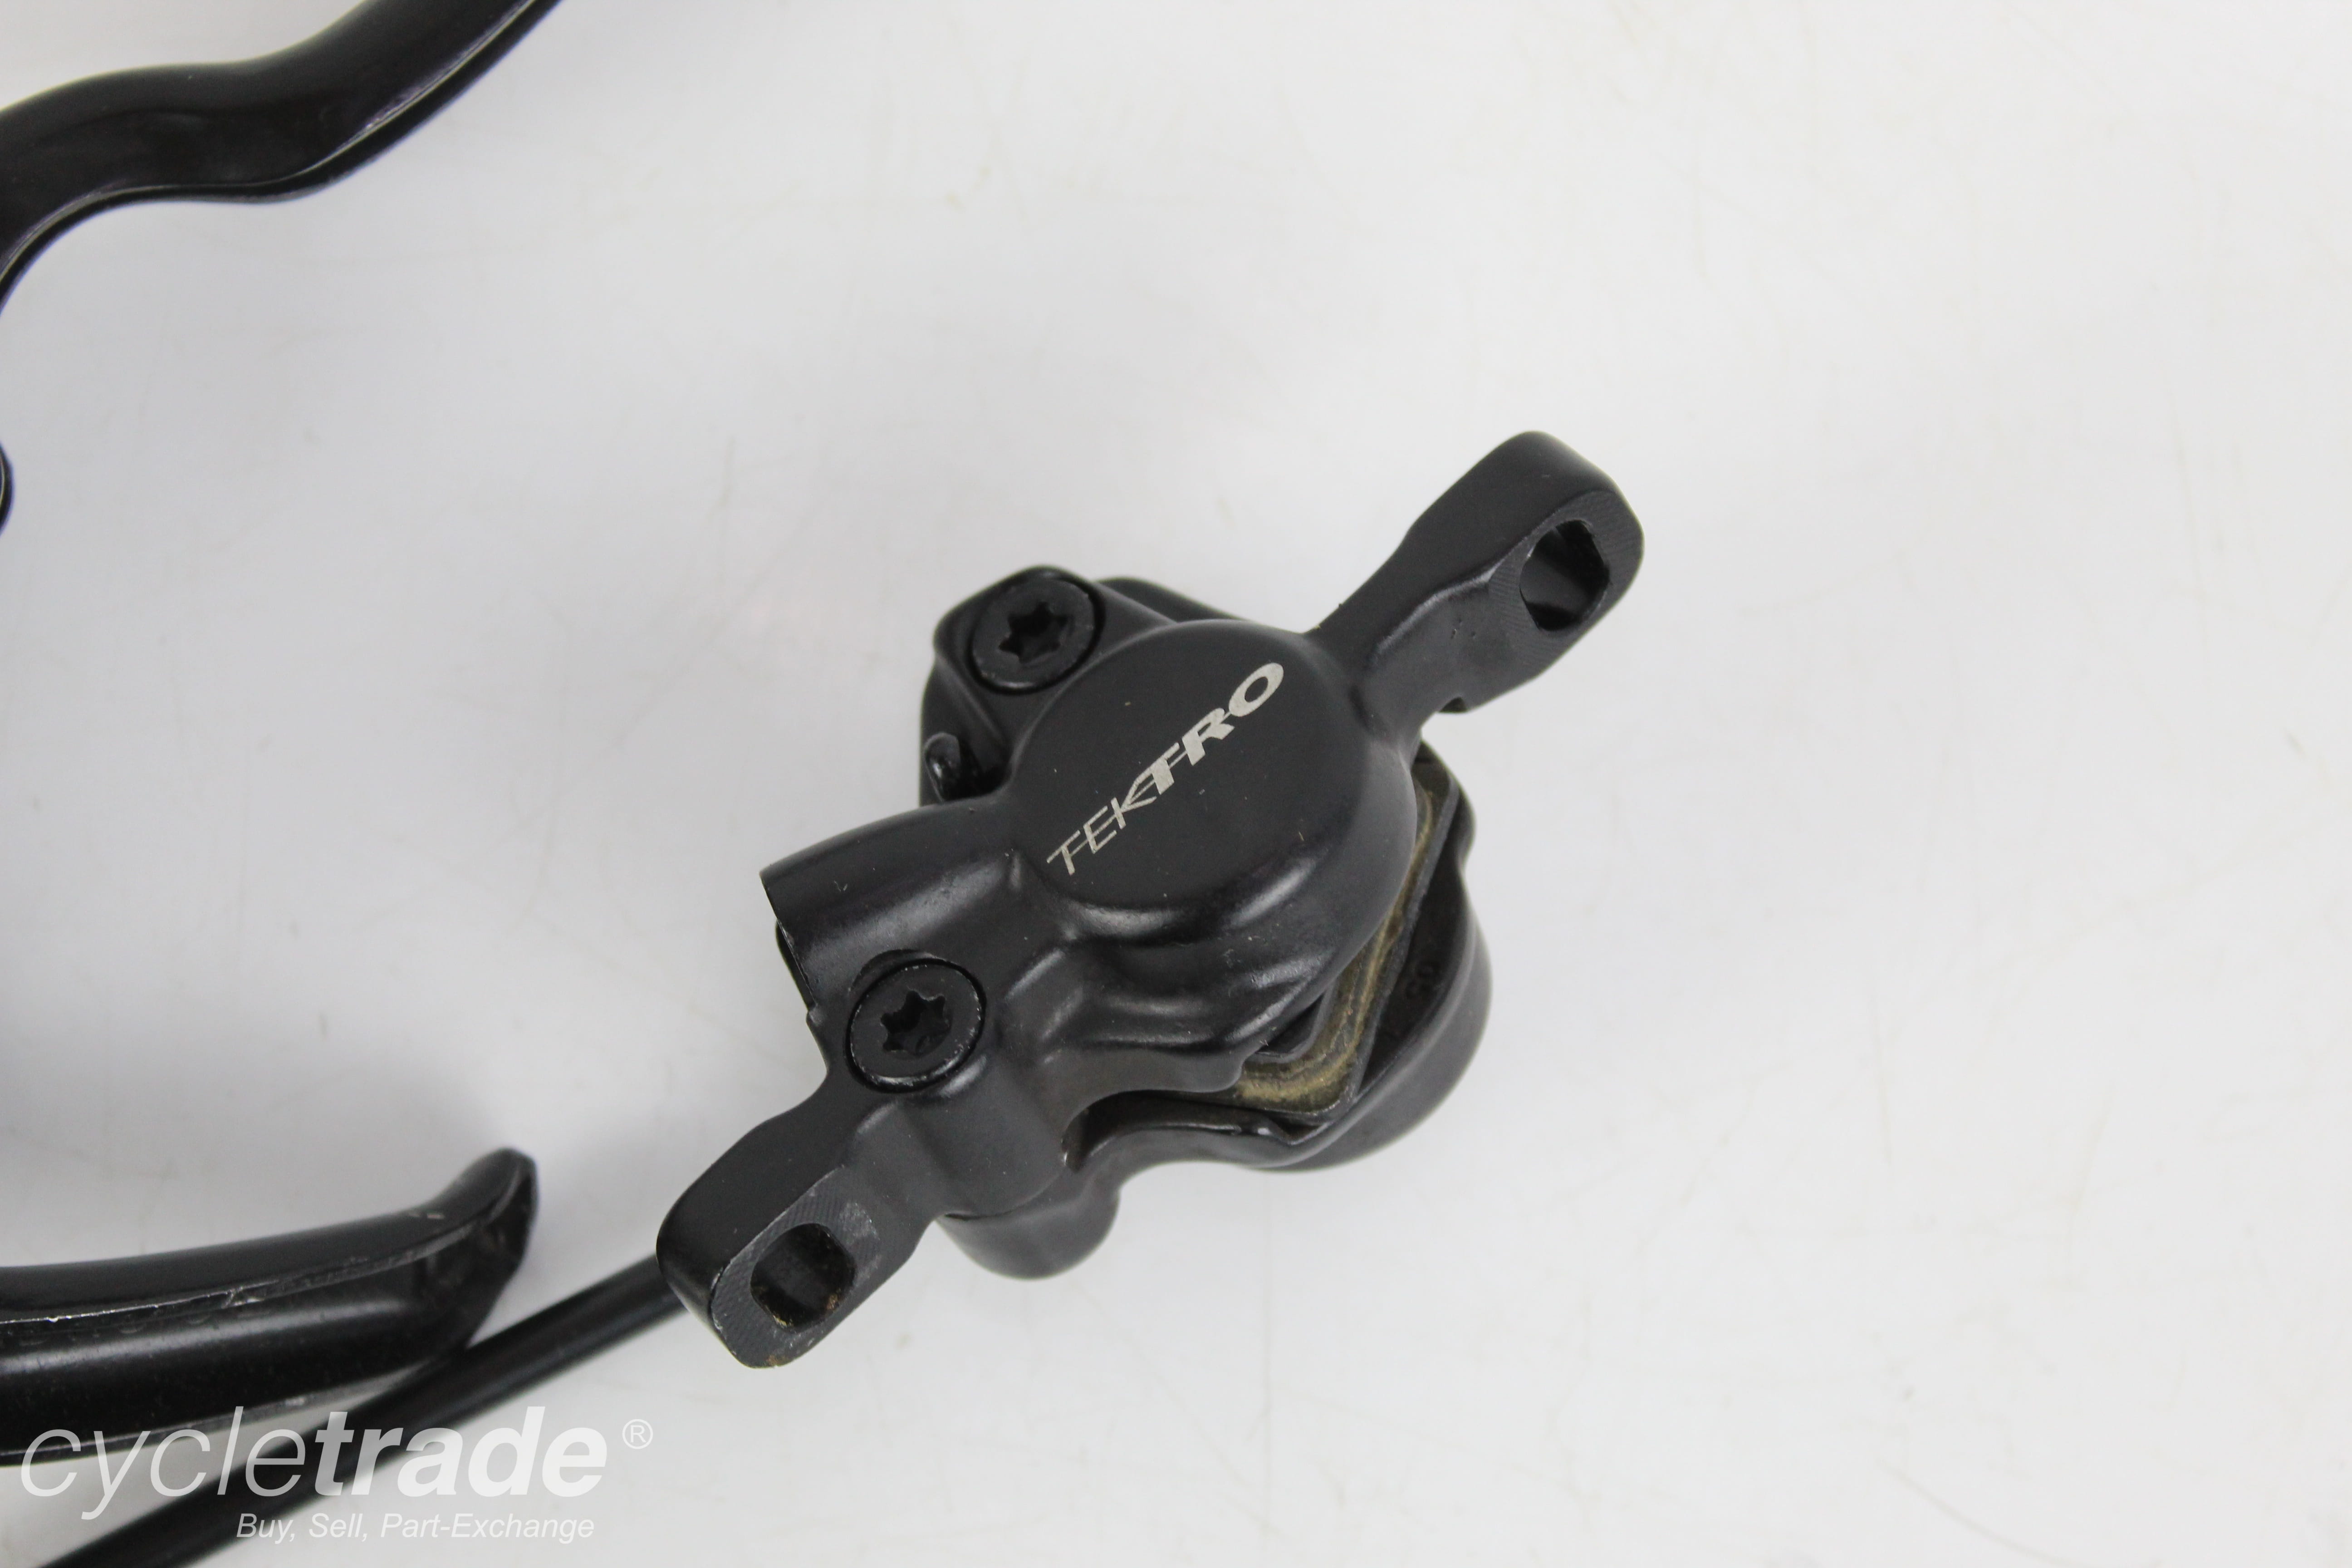 Hydraulic Disc Brakeset- Tektro HD-M275 Clamp-On - Grade B+